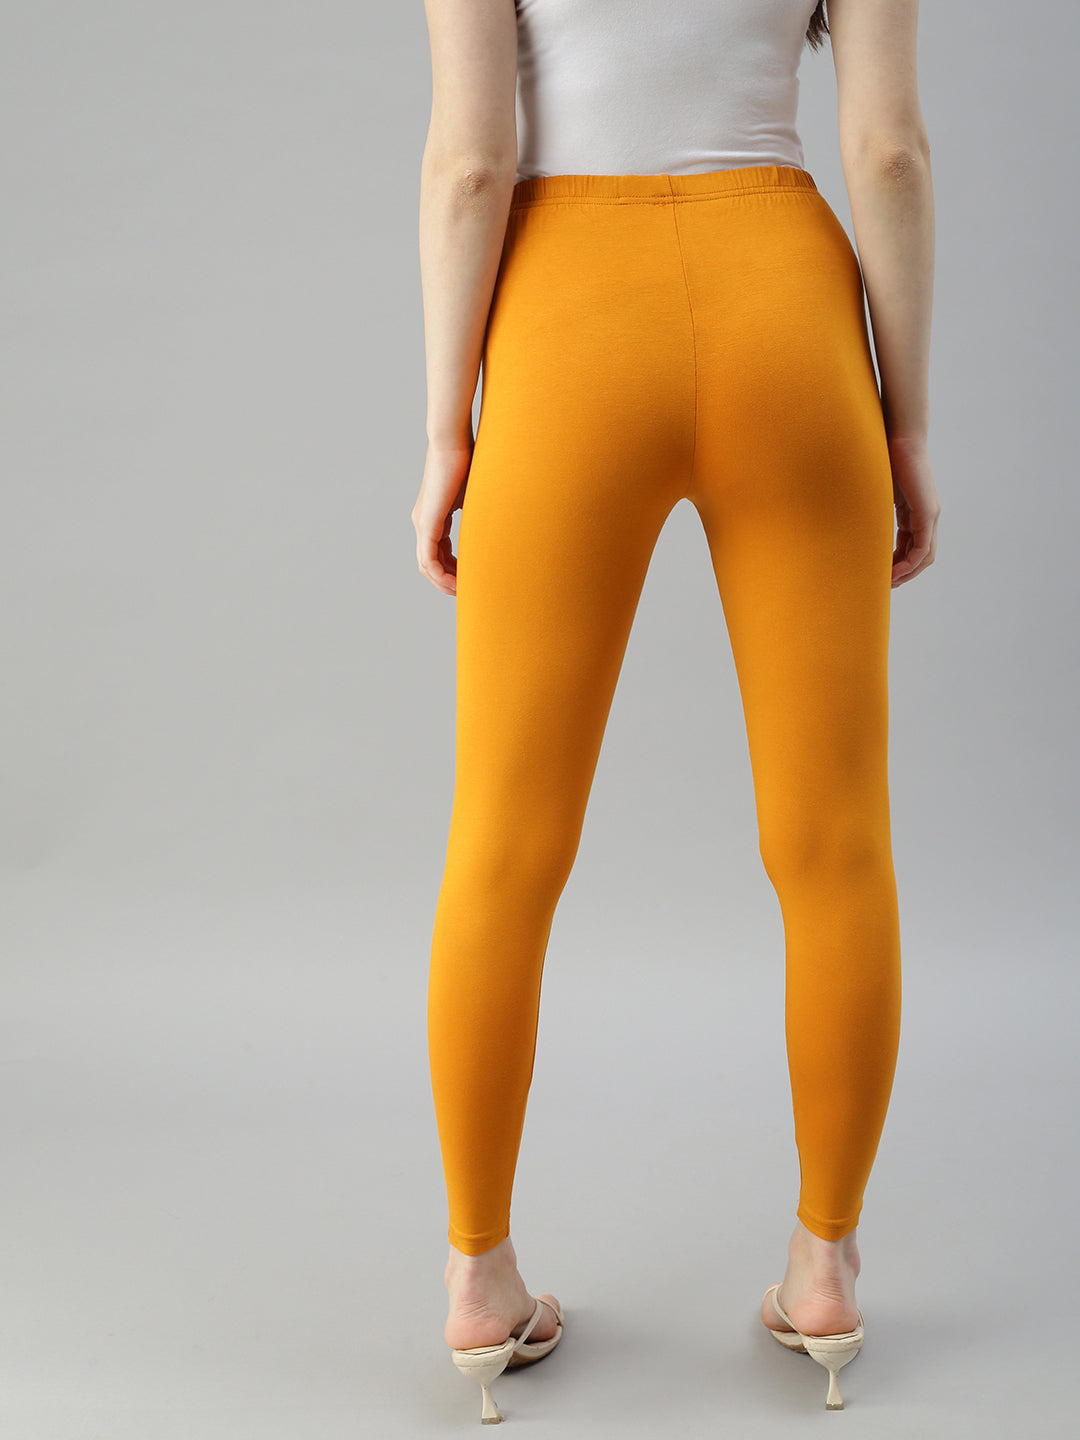 Palazzos & Salwars | Prisma Brand Peach Color Leggings Size M | Freeup